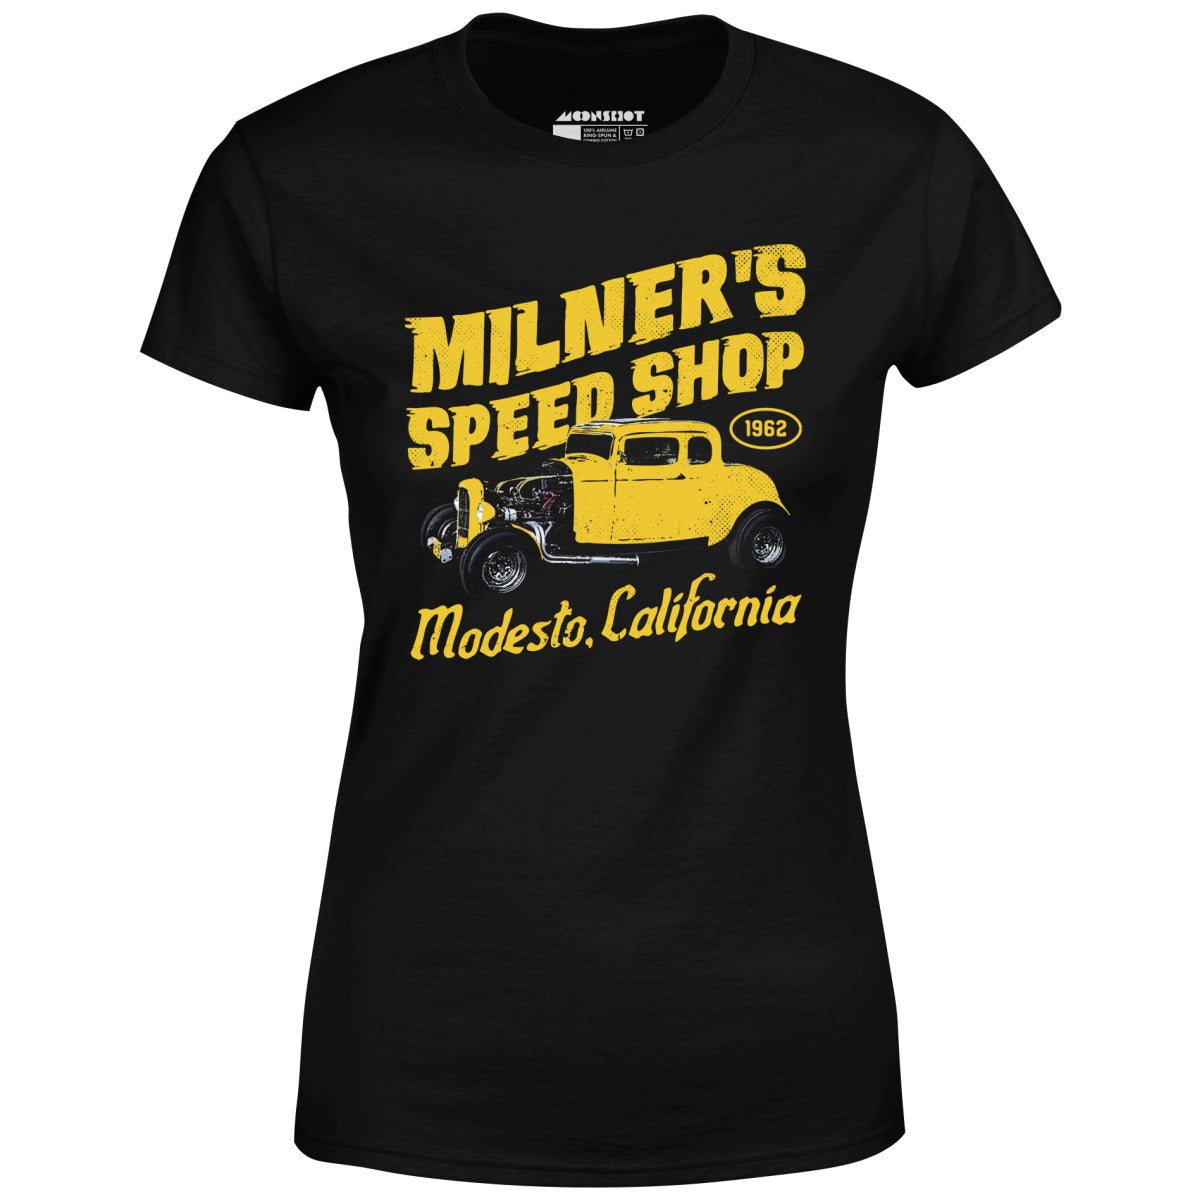 Milner's Speed Shop - Women's T-Shirt